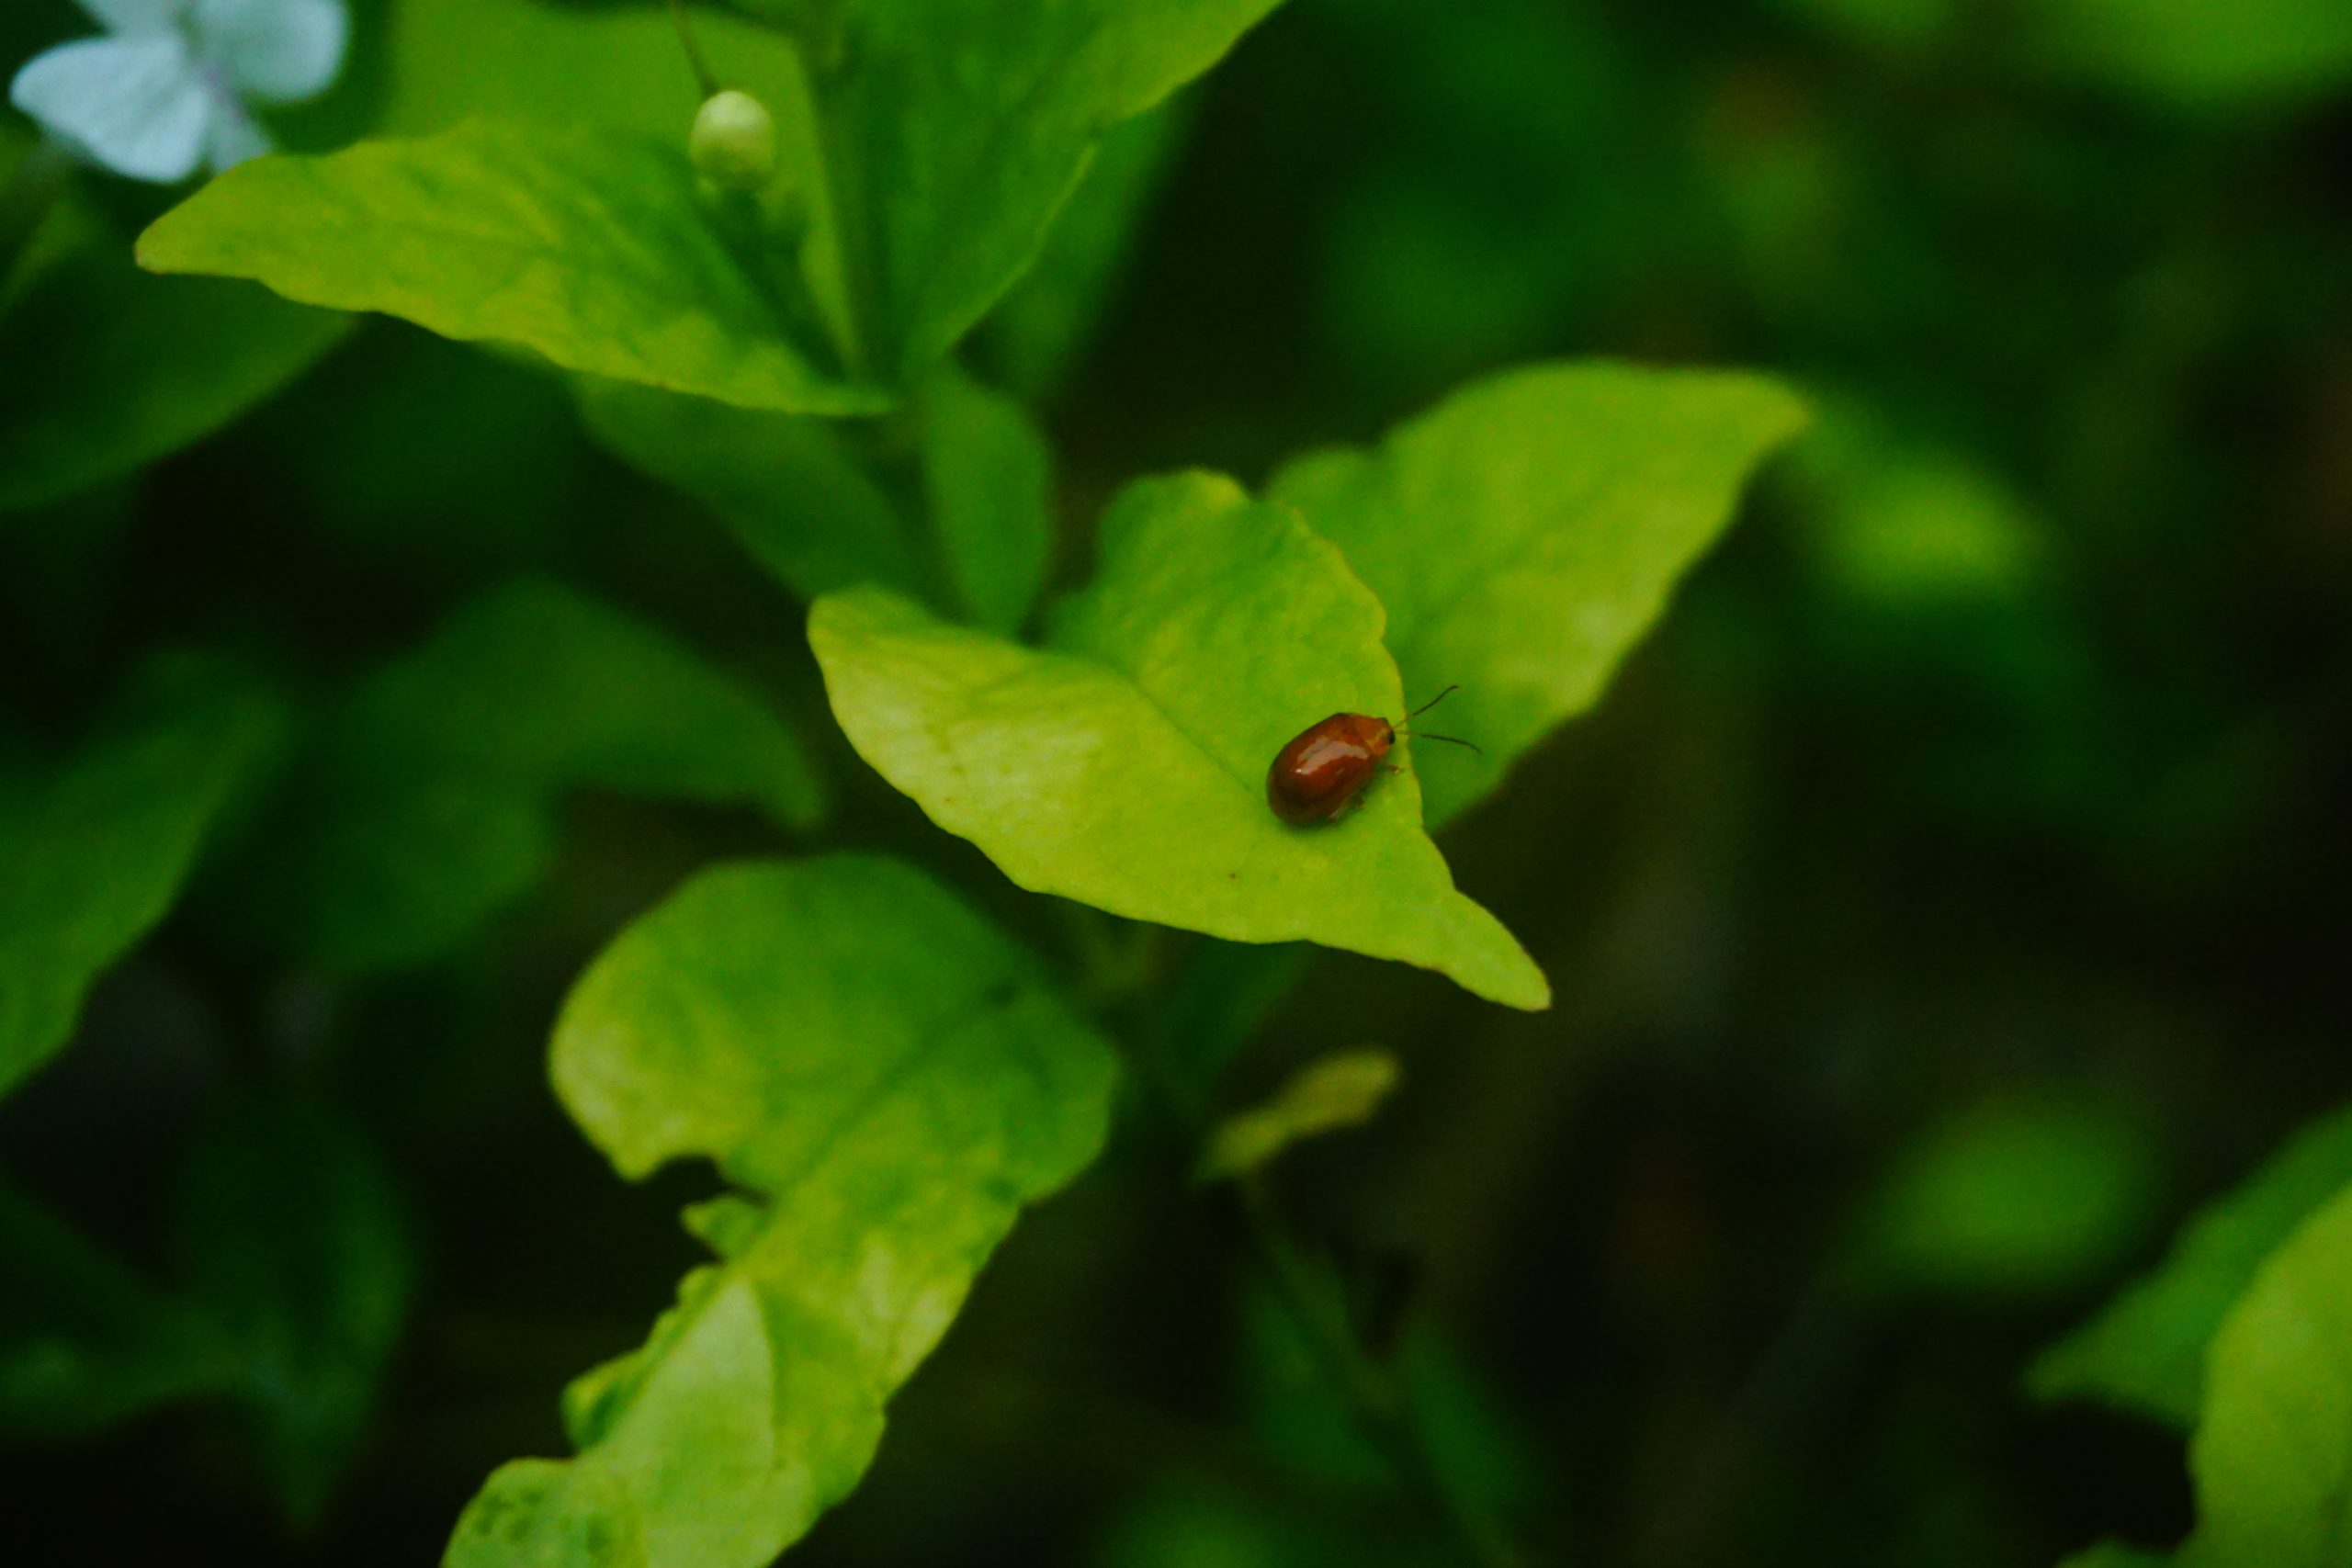 a lady bug on leaves